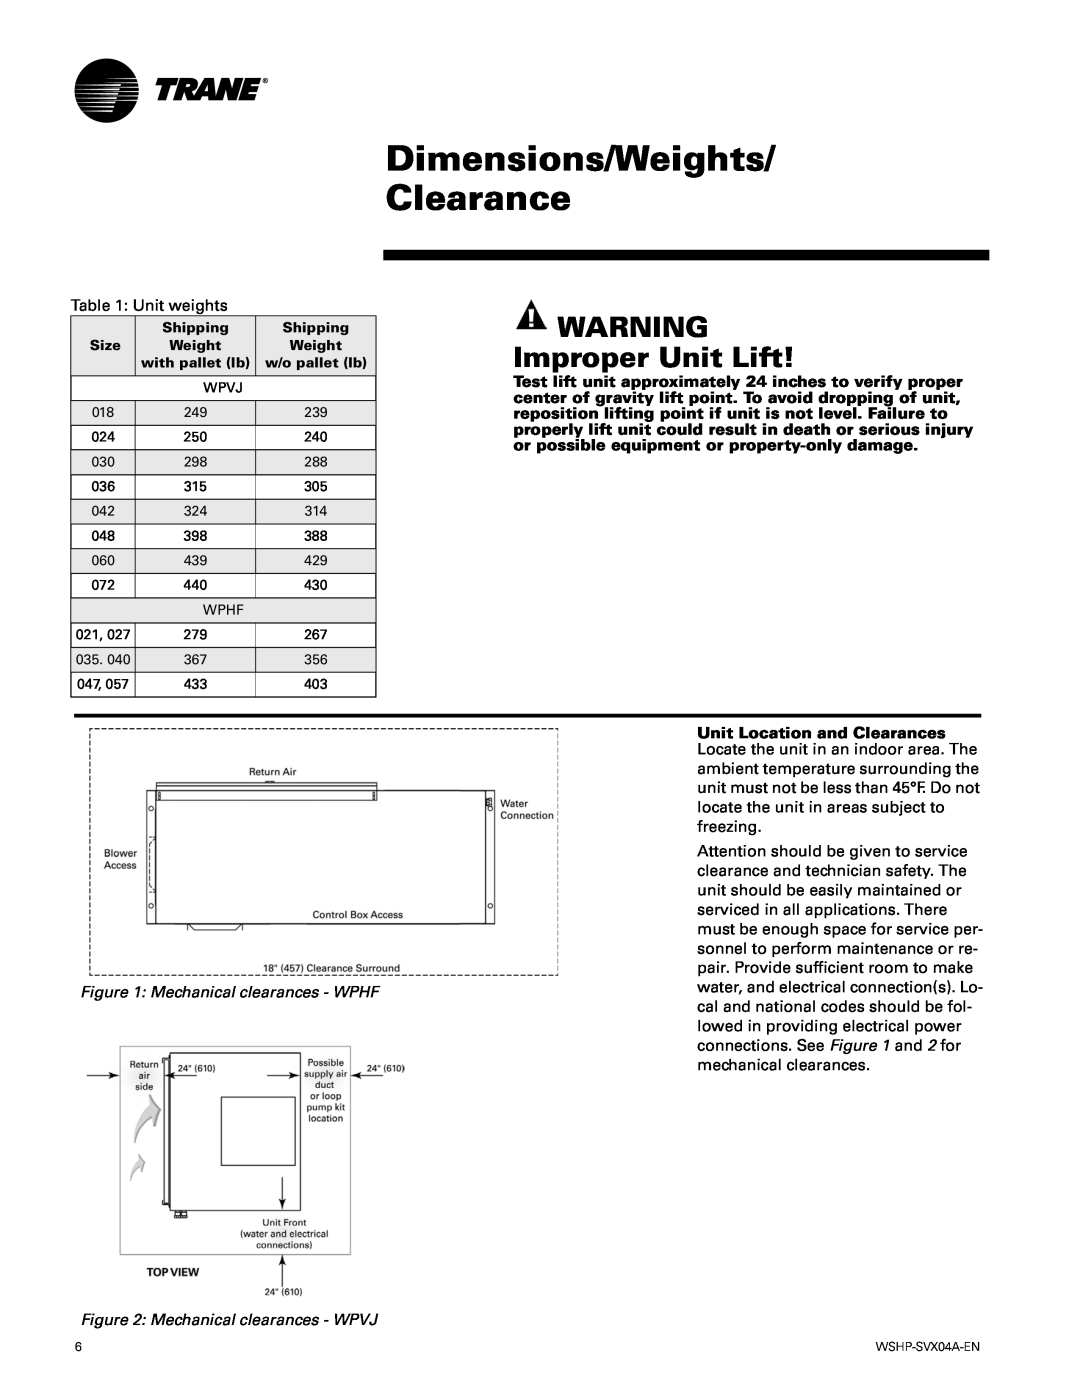 Trane WPHF, WPVJ manual Dimensions/Weights/ Clearance, Improper Unit Lift 